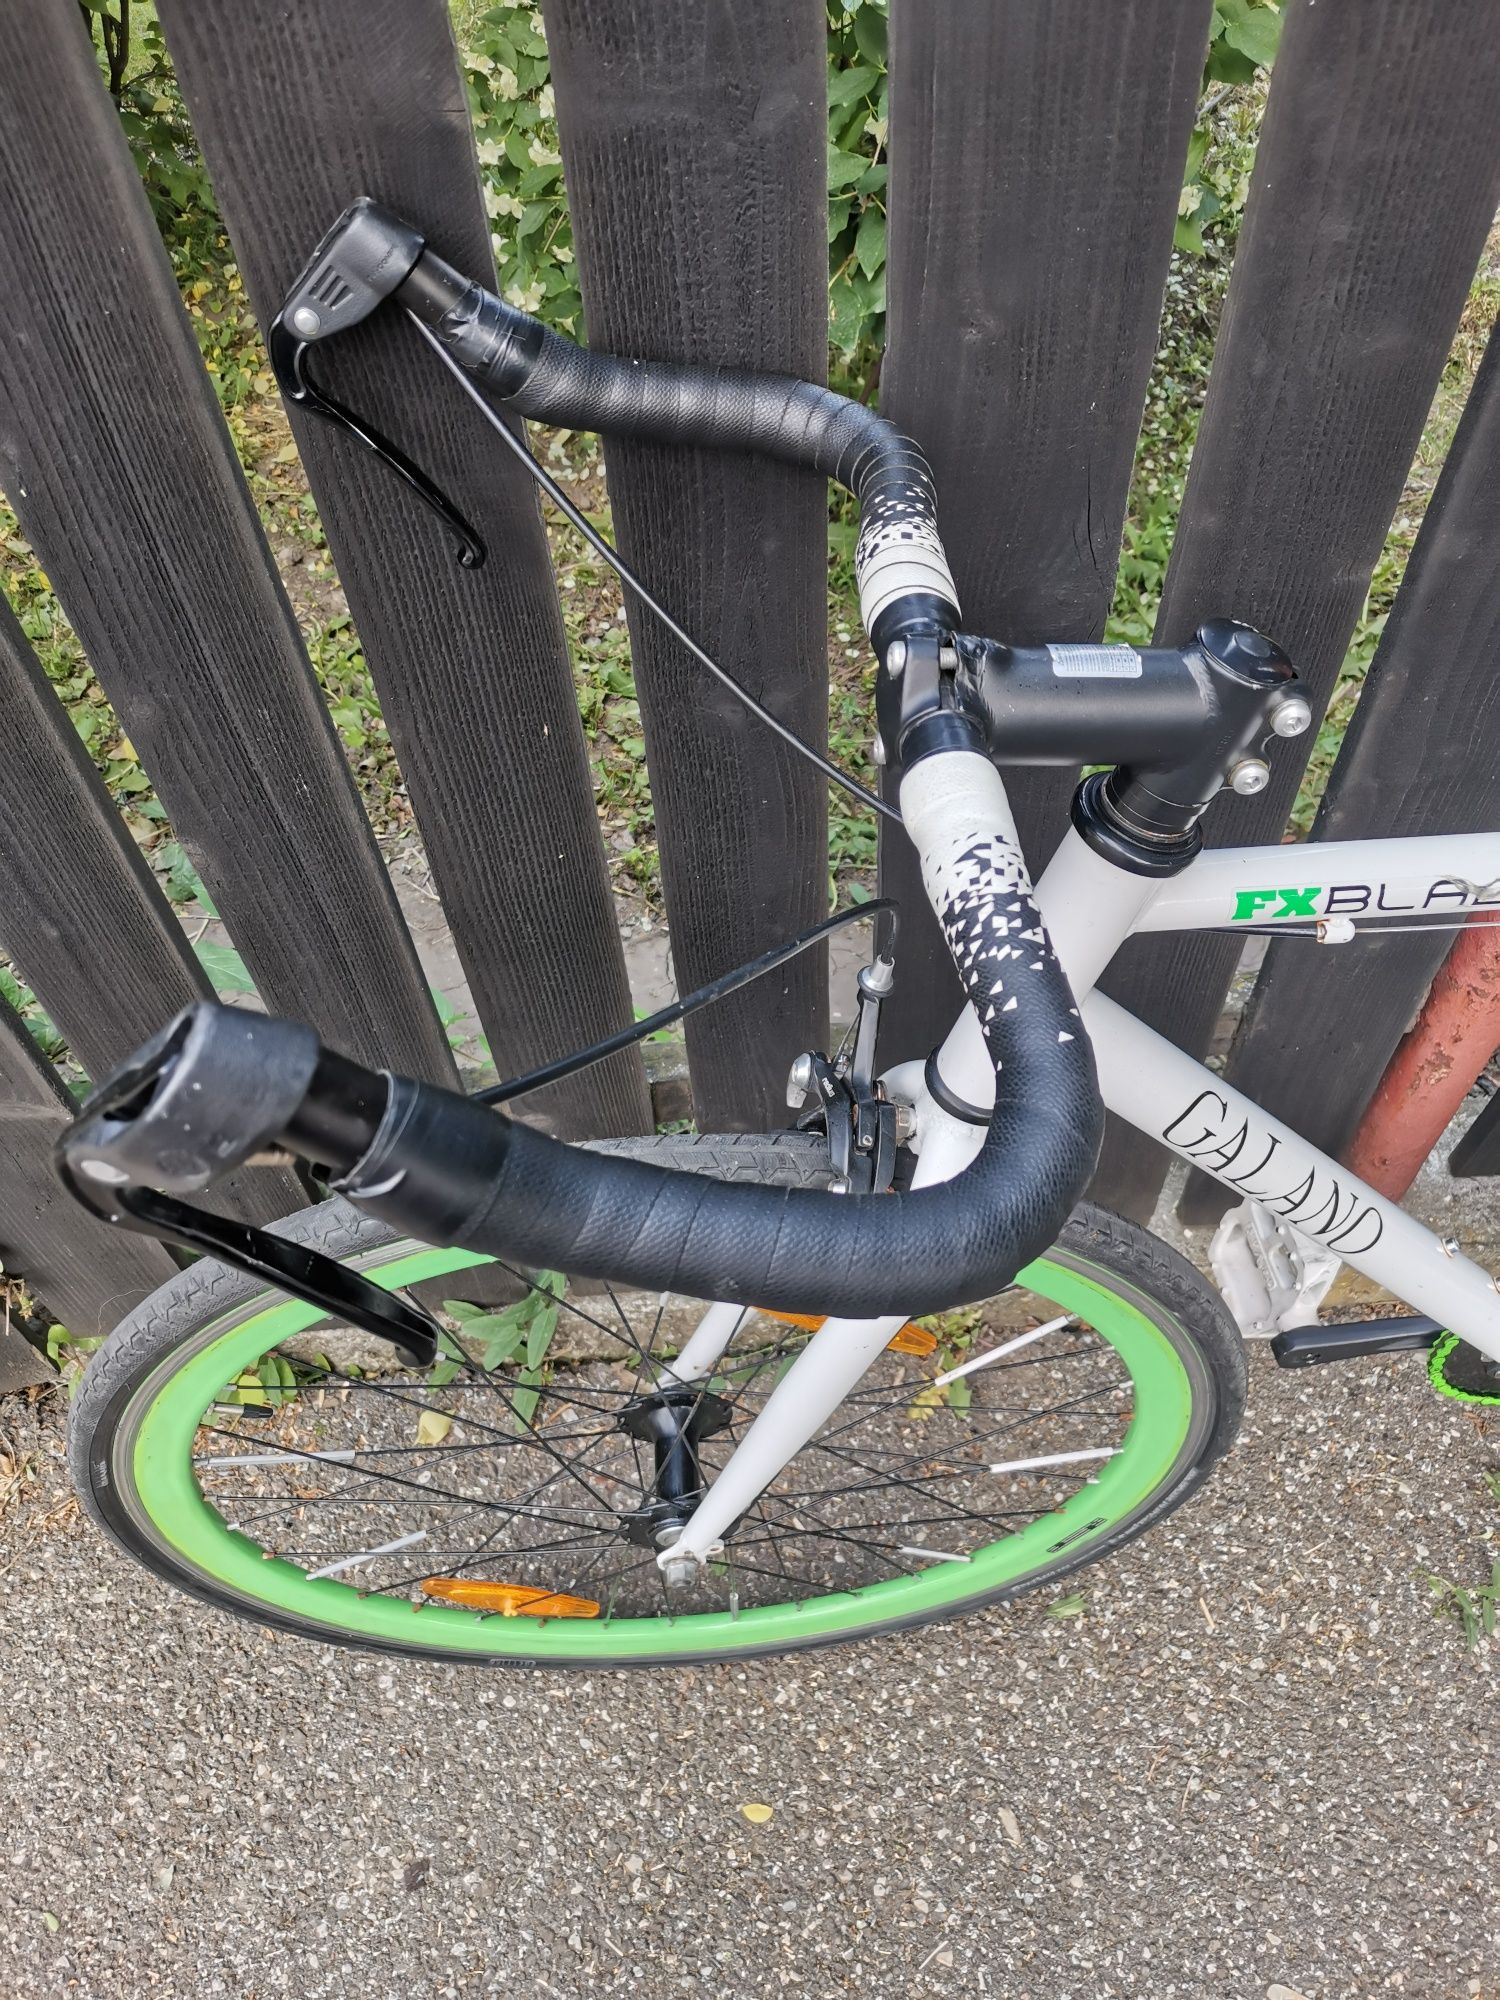 Bicicleta Single Galano fx blade